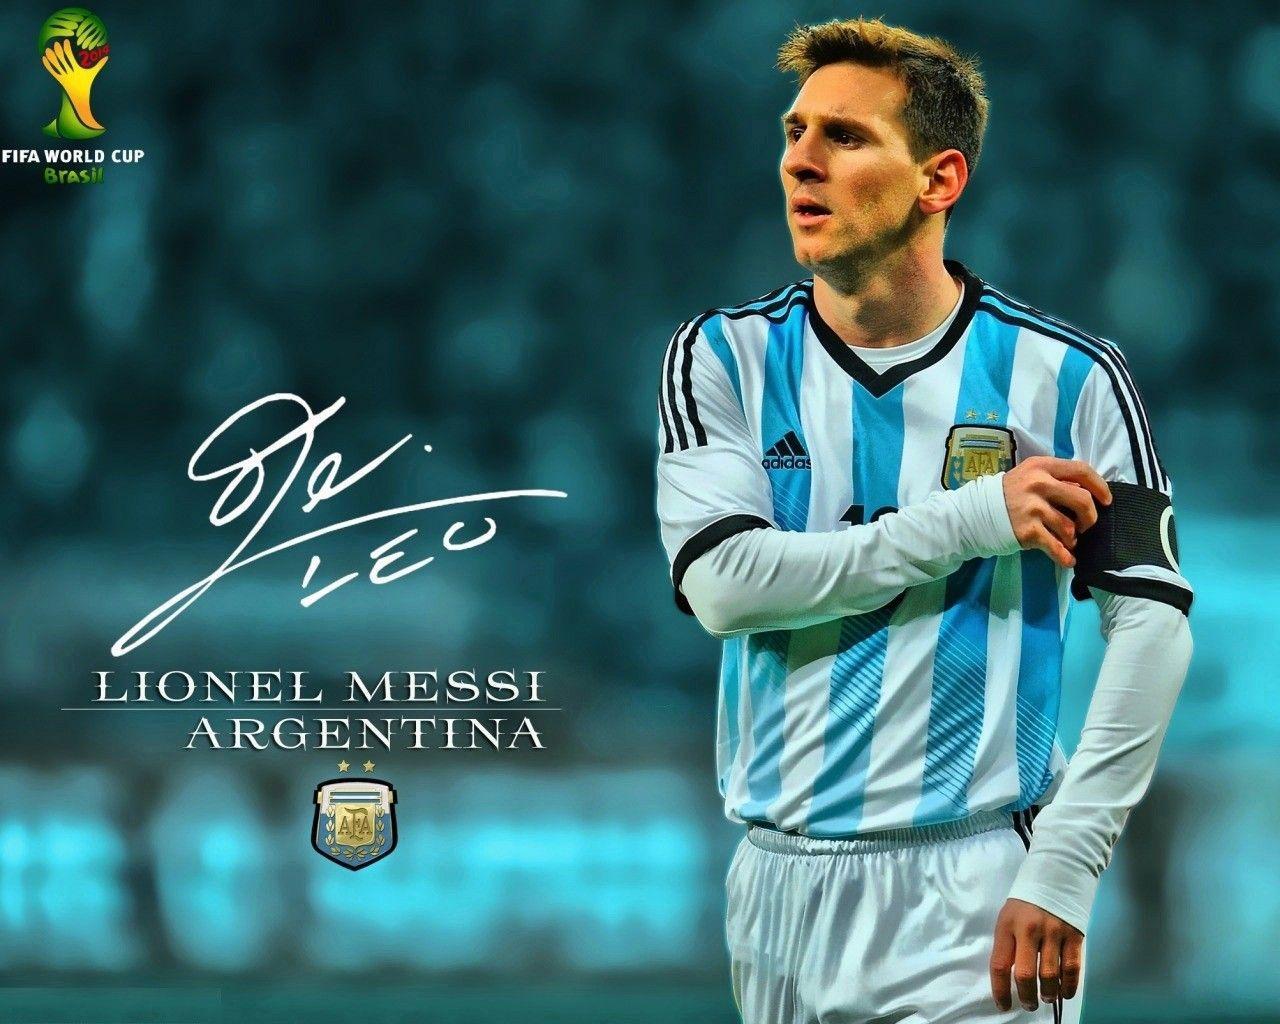 Best Lionel Messi Wallpaper 2014 World Cup HD Barcelona